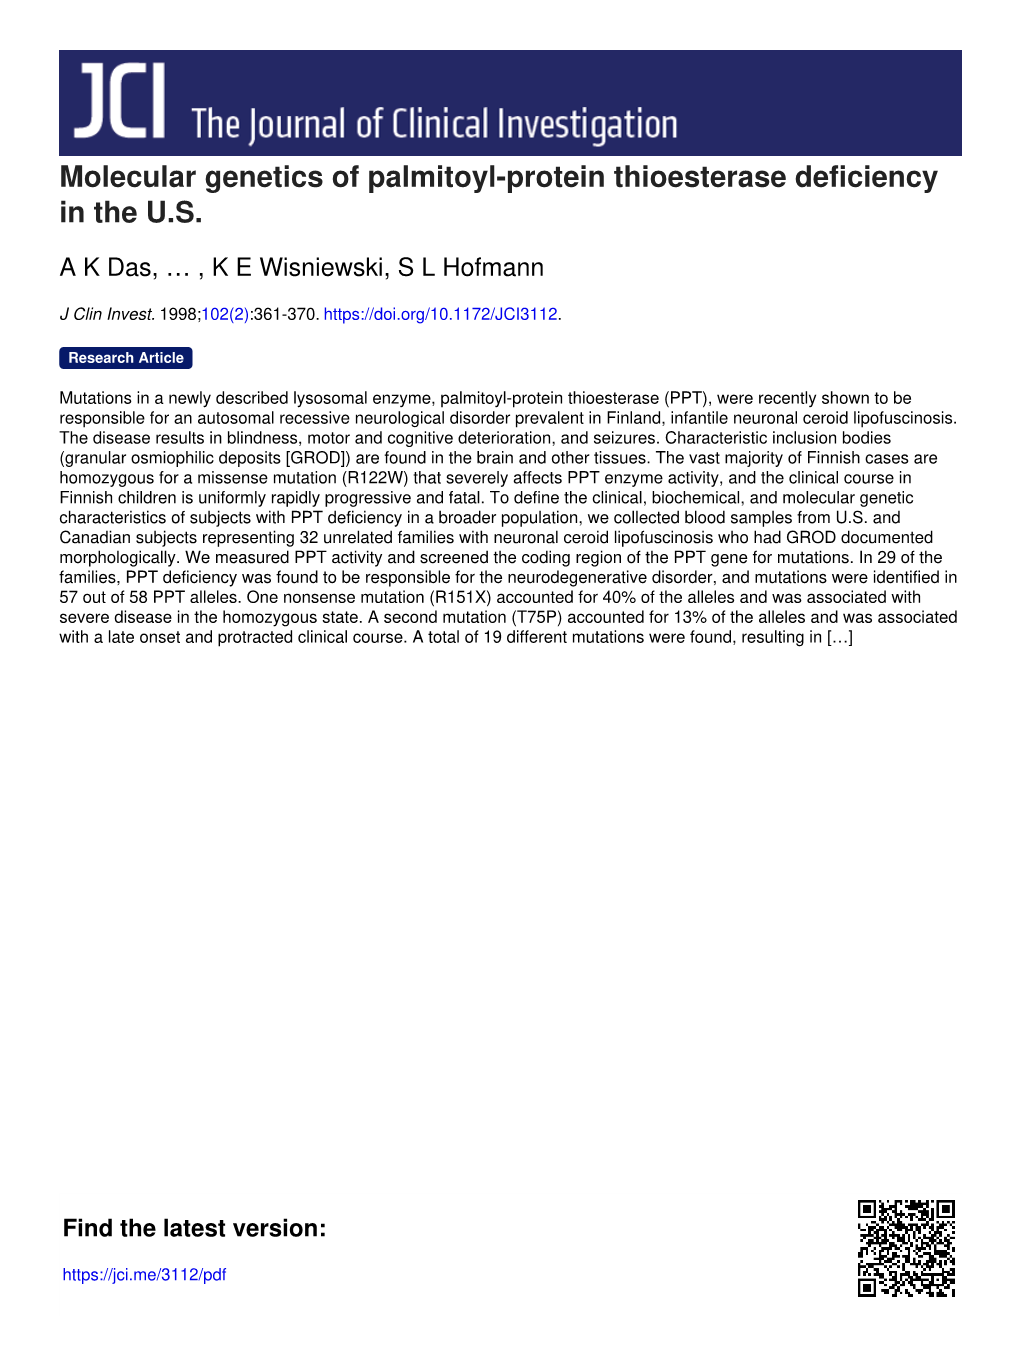 Molecular Genetics of Palmitoyl-Protein Thioesterase Deficiency in the U.S